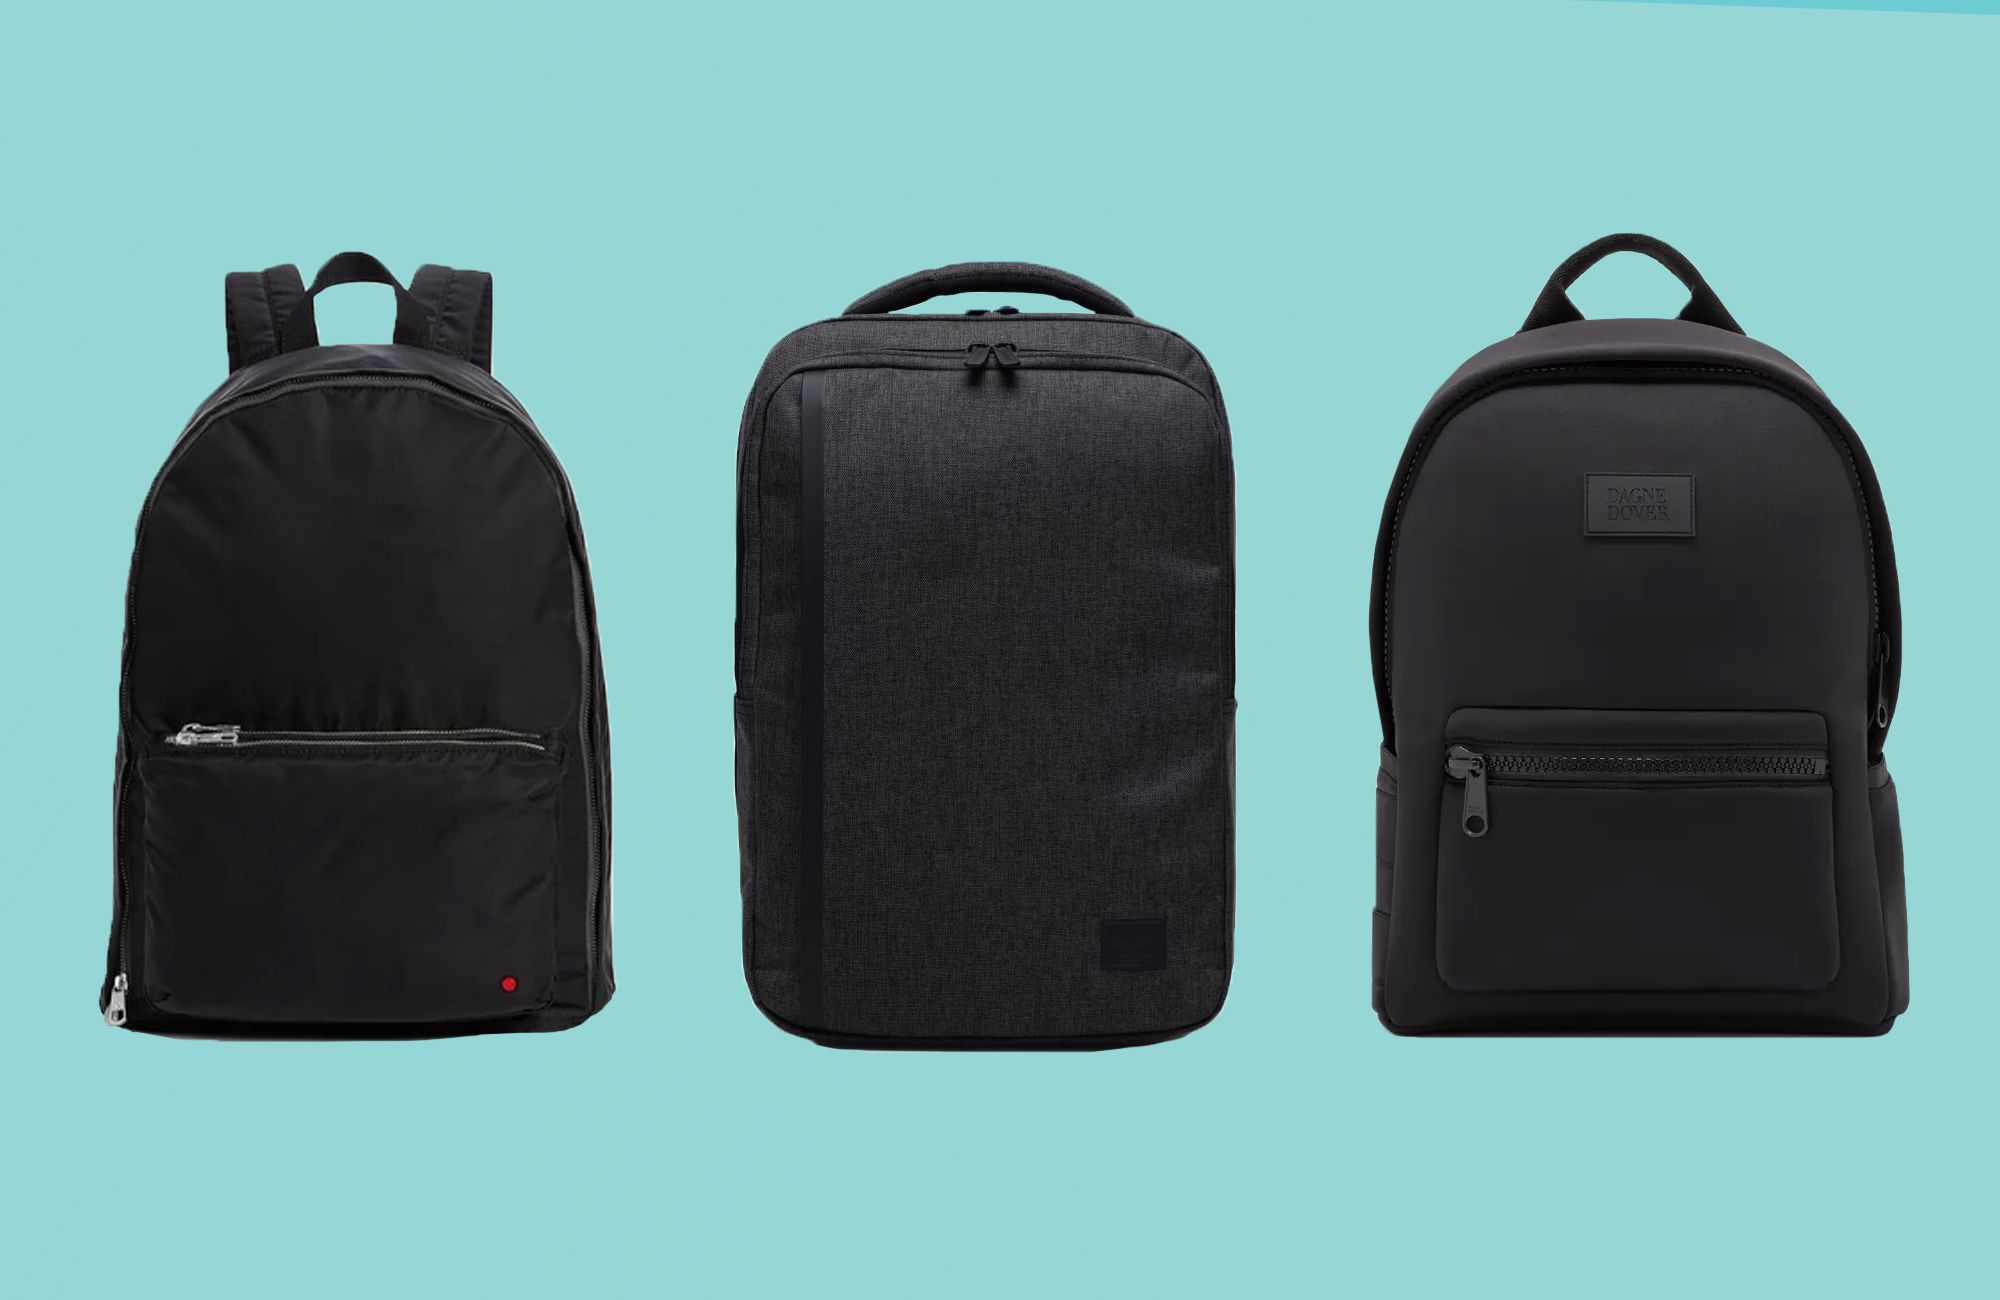 Custom Bags Outdoor Backpack Lightweight Travel Laptop Backpack Bag 